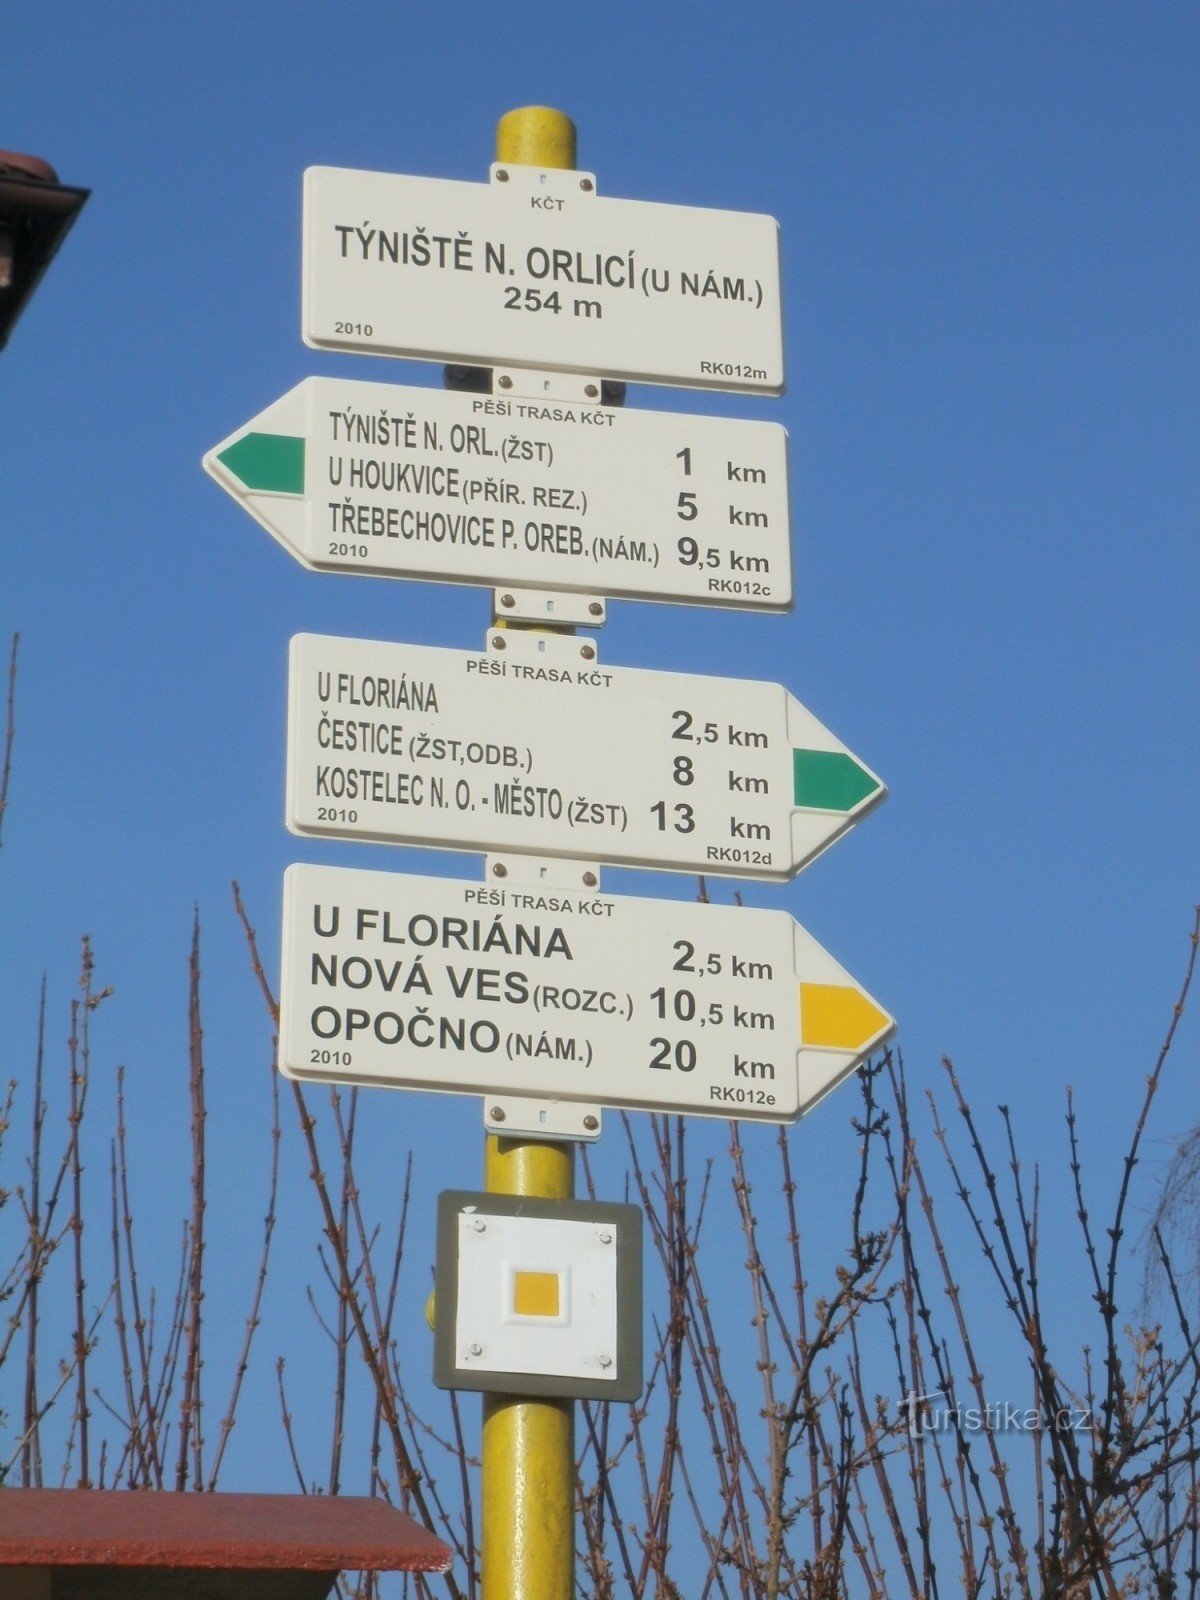 Týniště nad Orlicí - glavni turistički putokaz